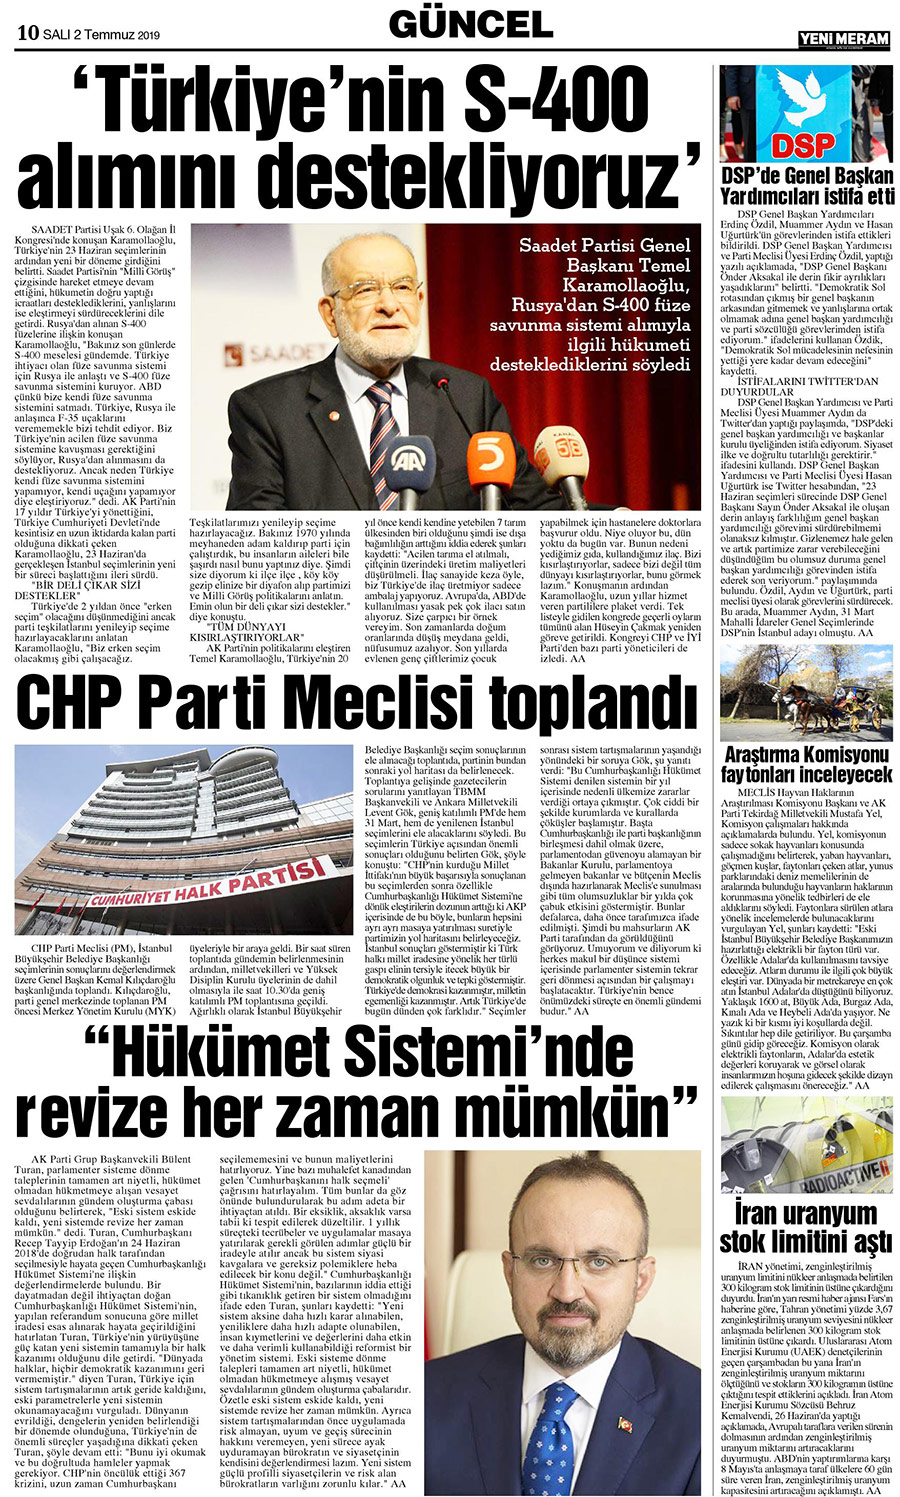 2 Temmuz 2019 Yeni Meram Gazetesi